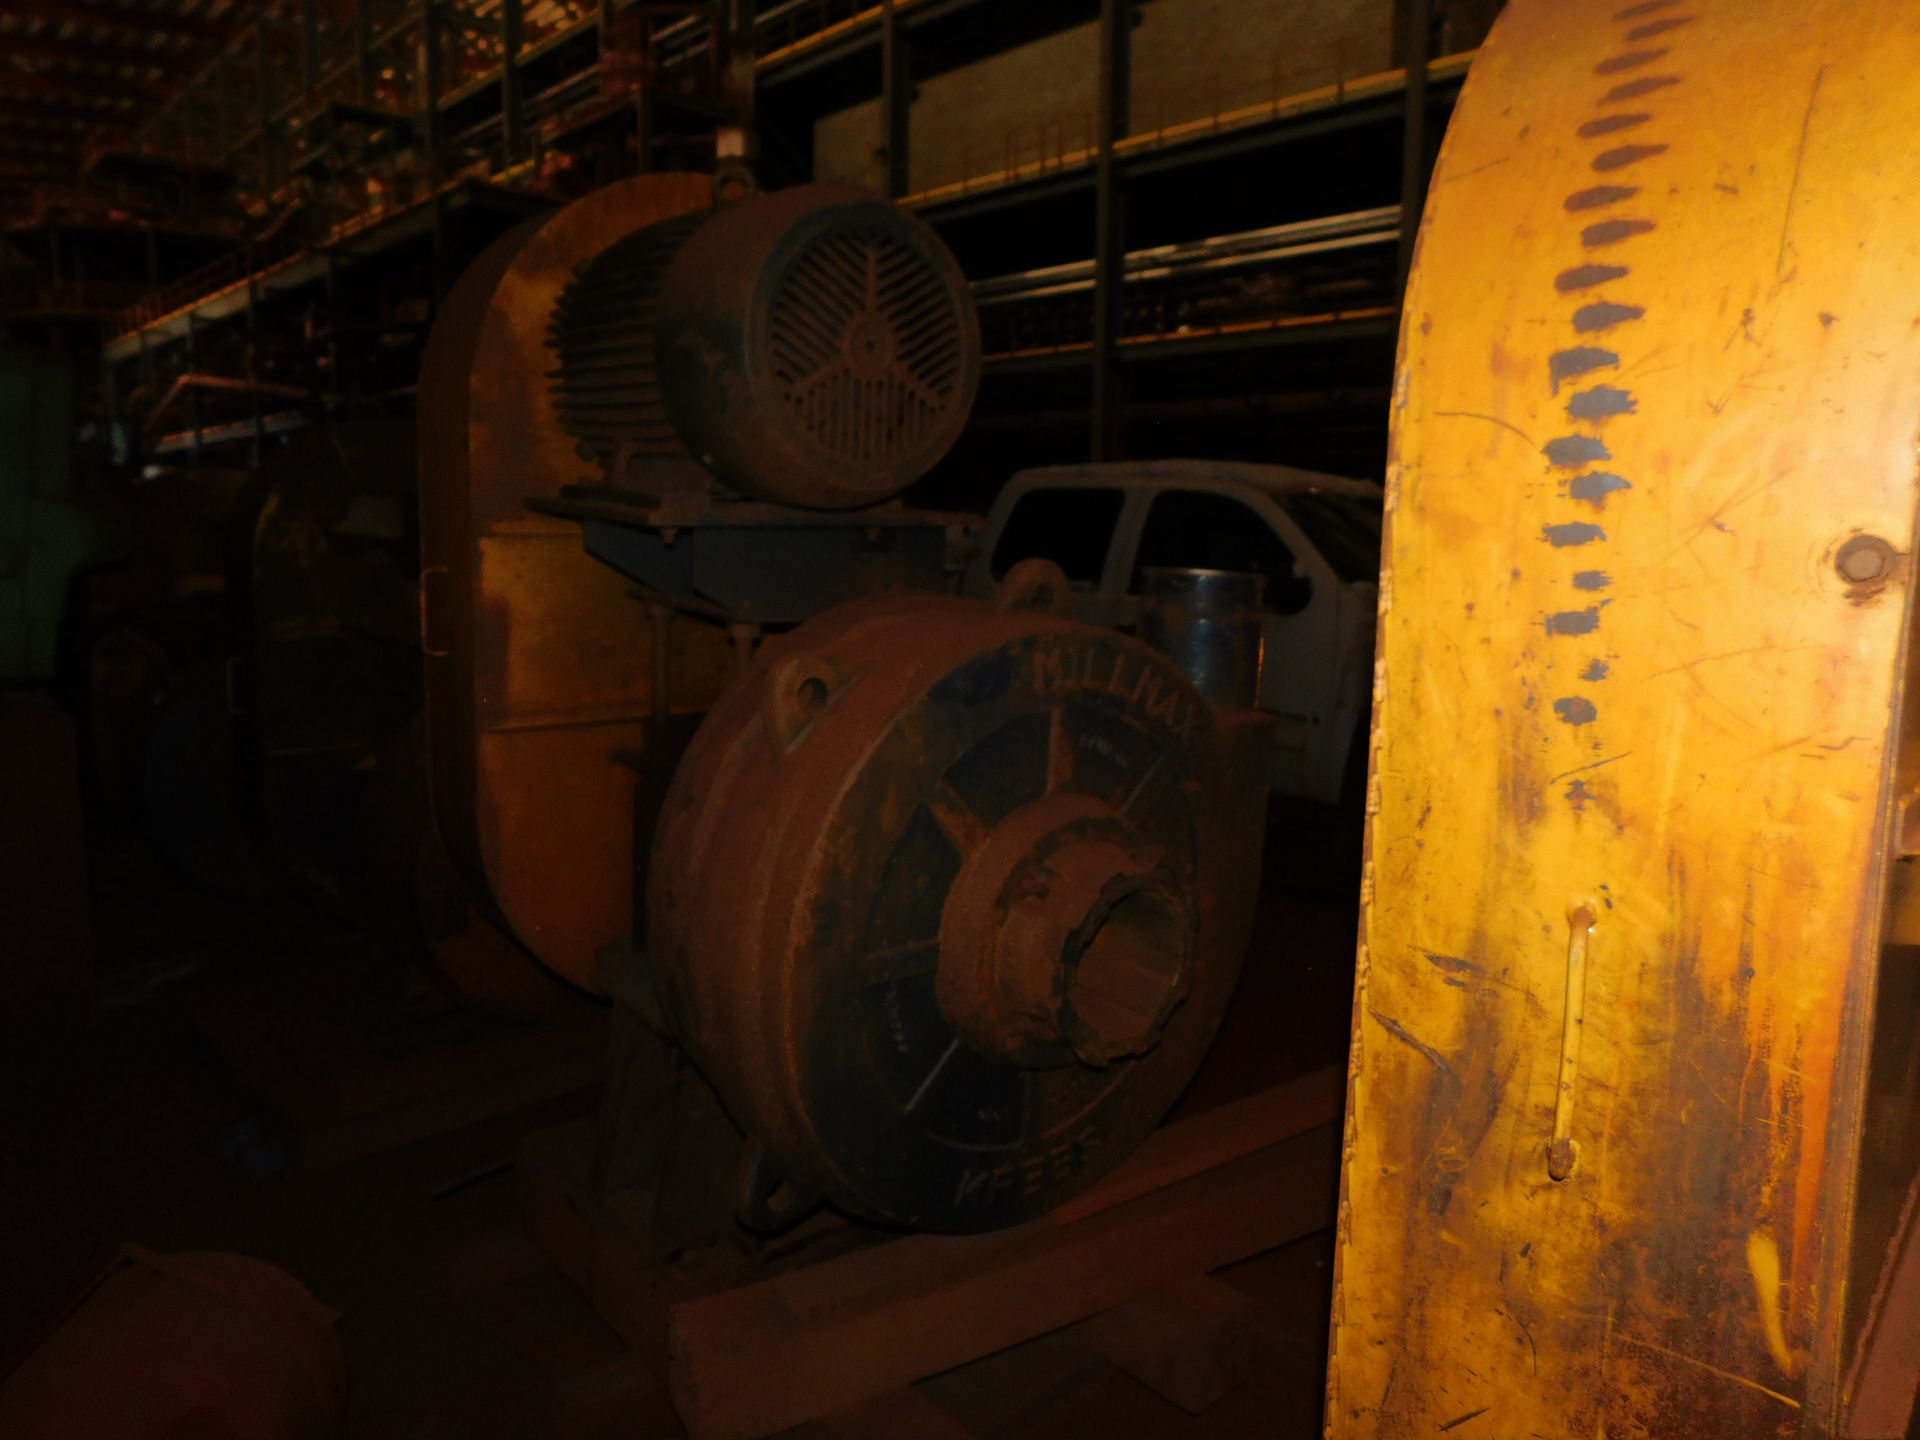 Millmax centrifugal pump - Image 3 of 3